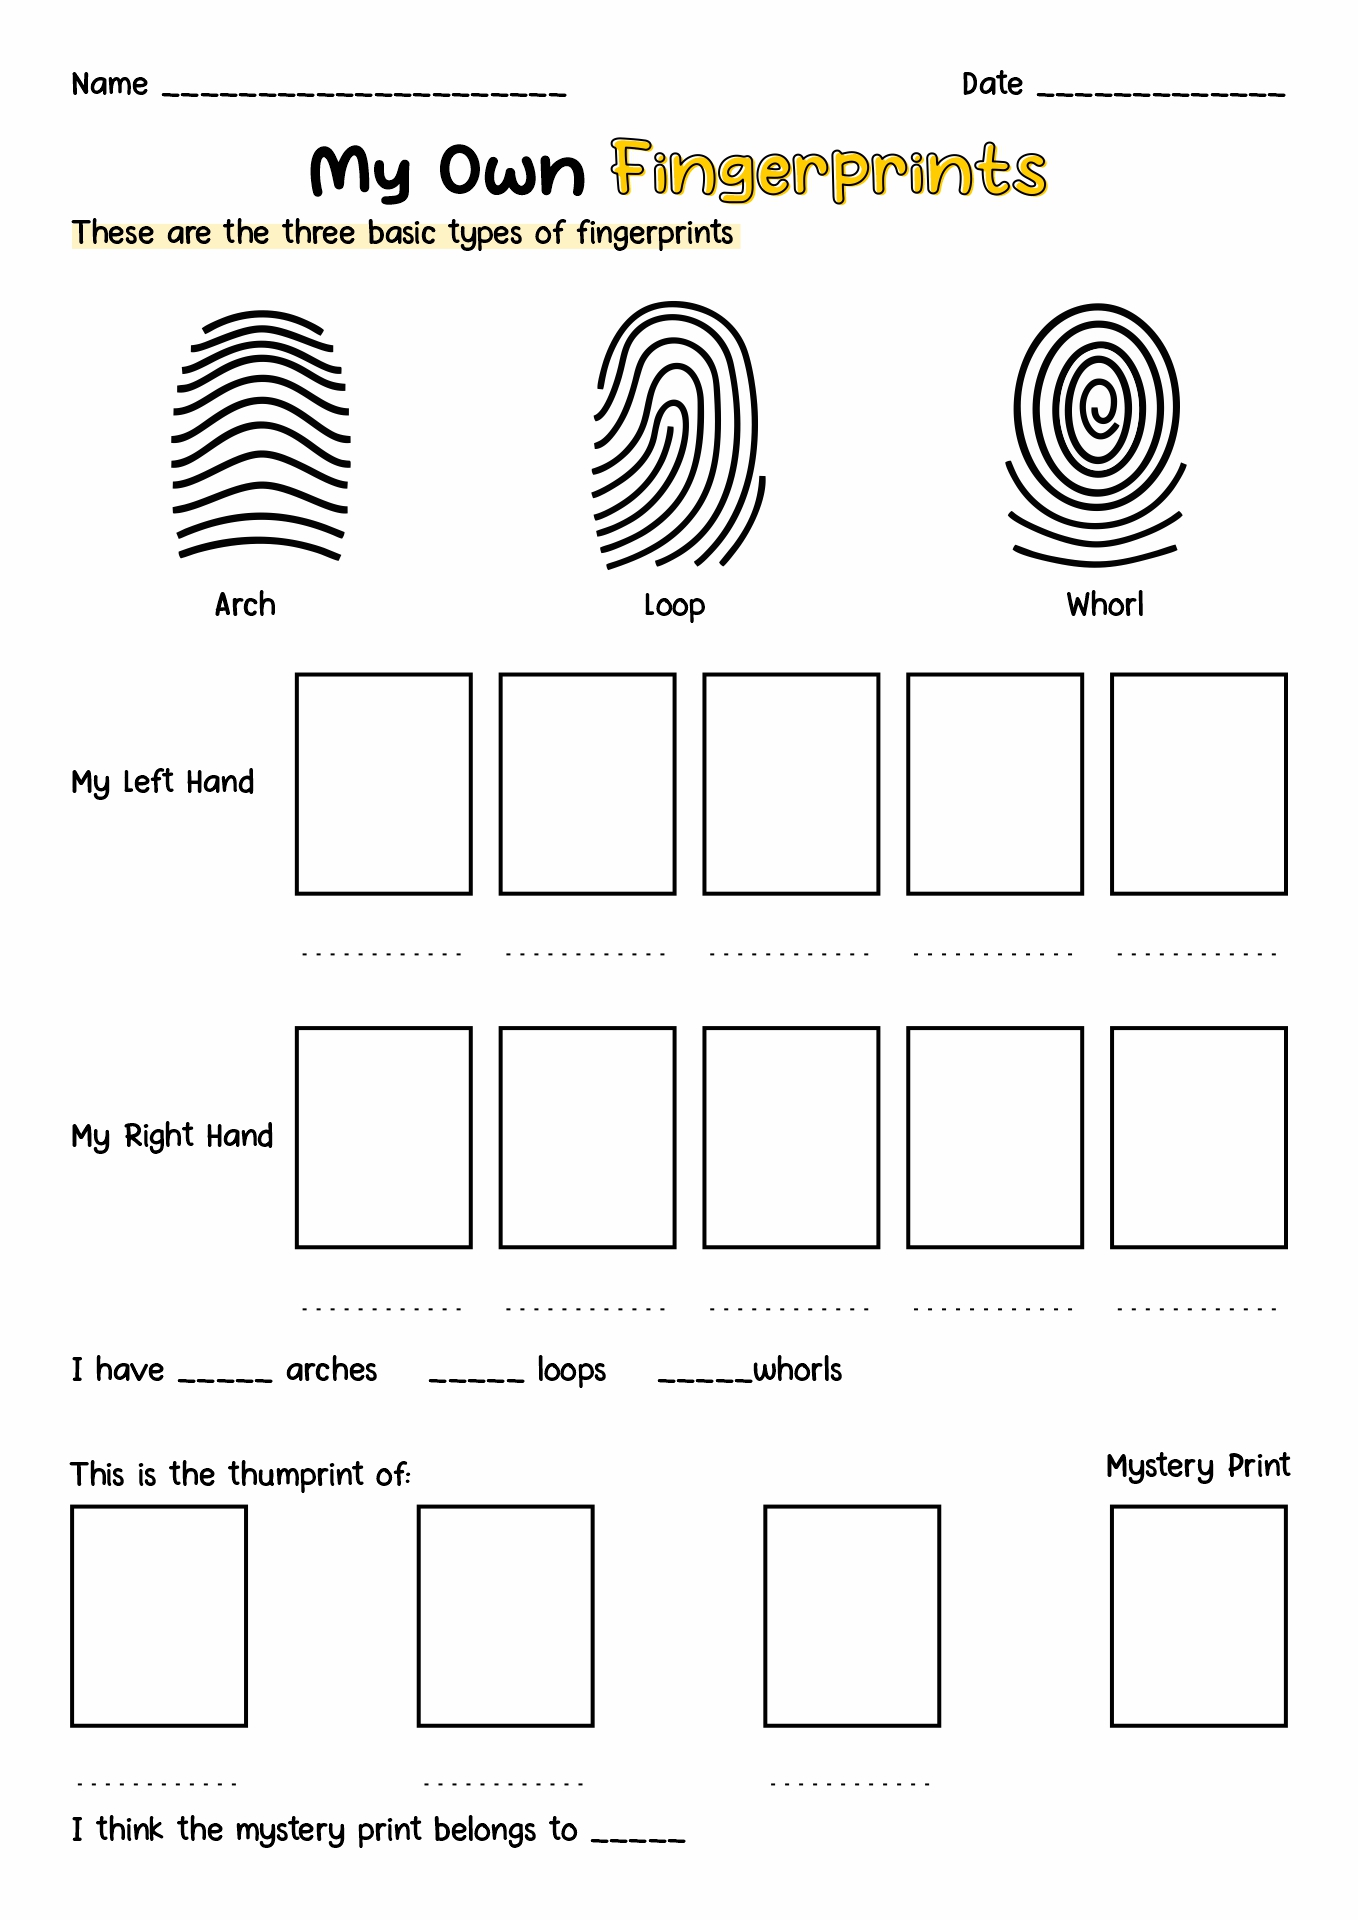 Fingerprint Activity Worksheet for Kids Image